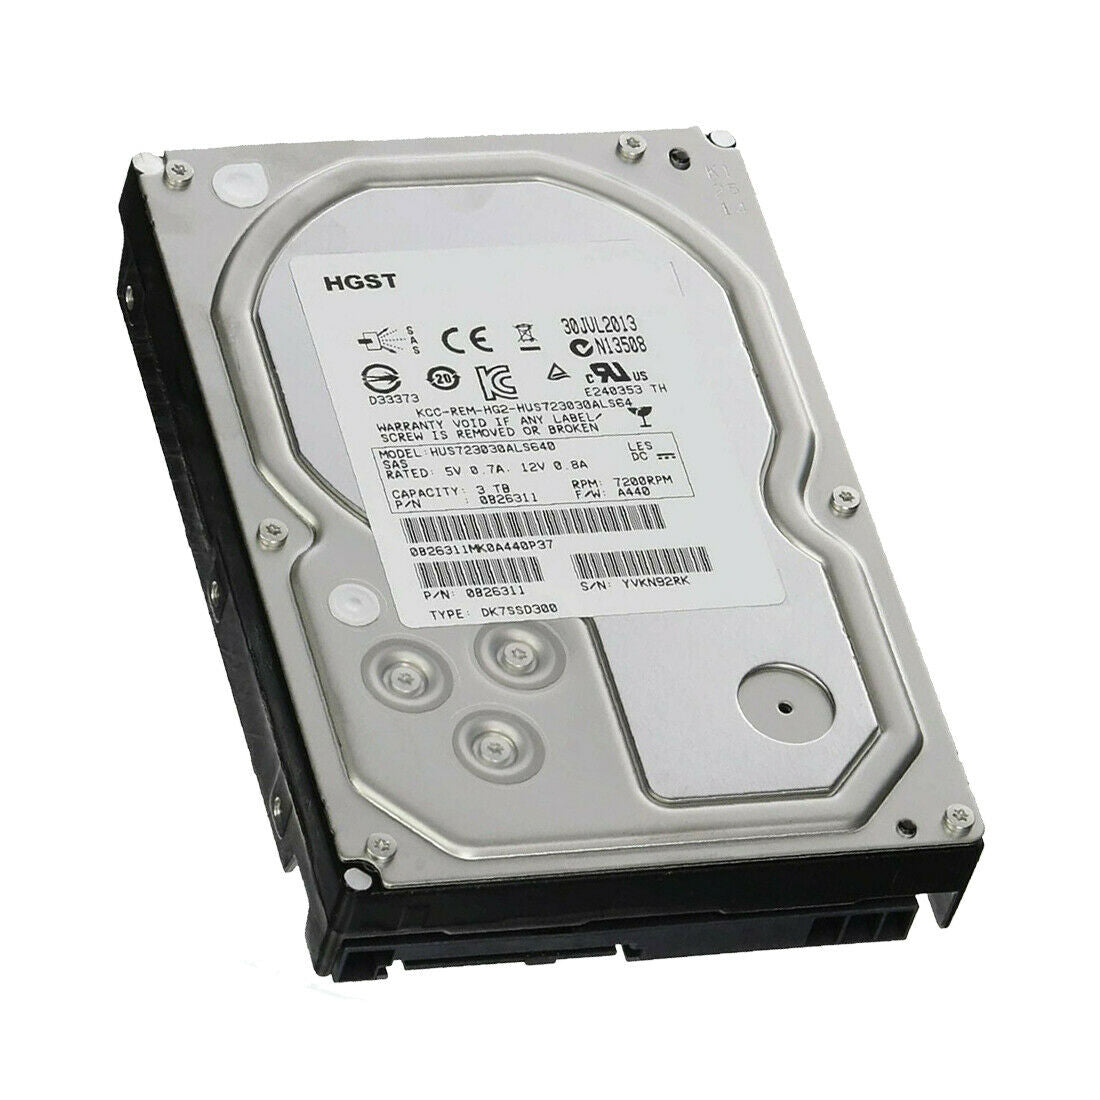 Hitachi (SAS) HGST 3.5" Internal Hard Drive 3TB 7200rpm 0B26311 HUS723030ALS640